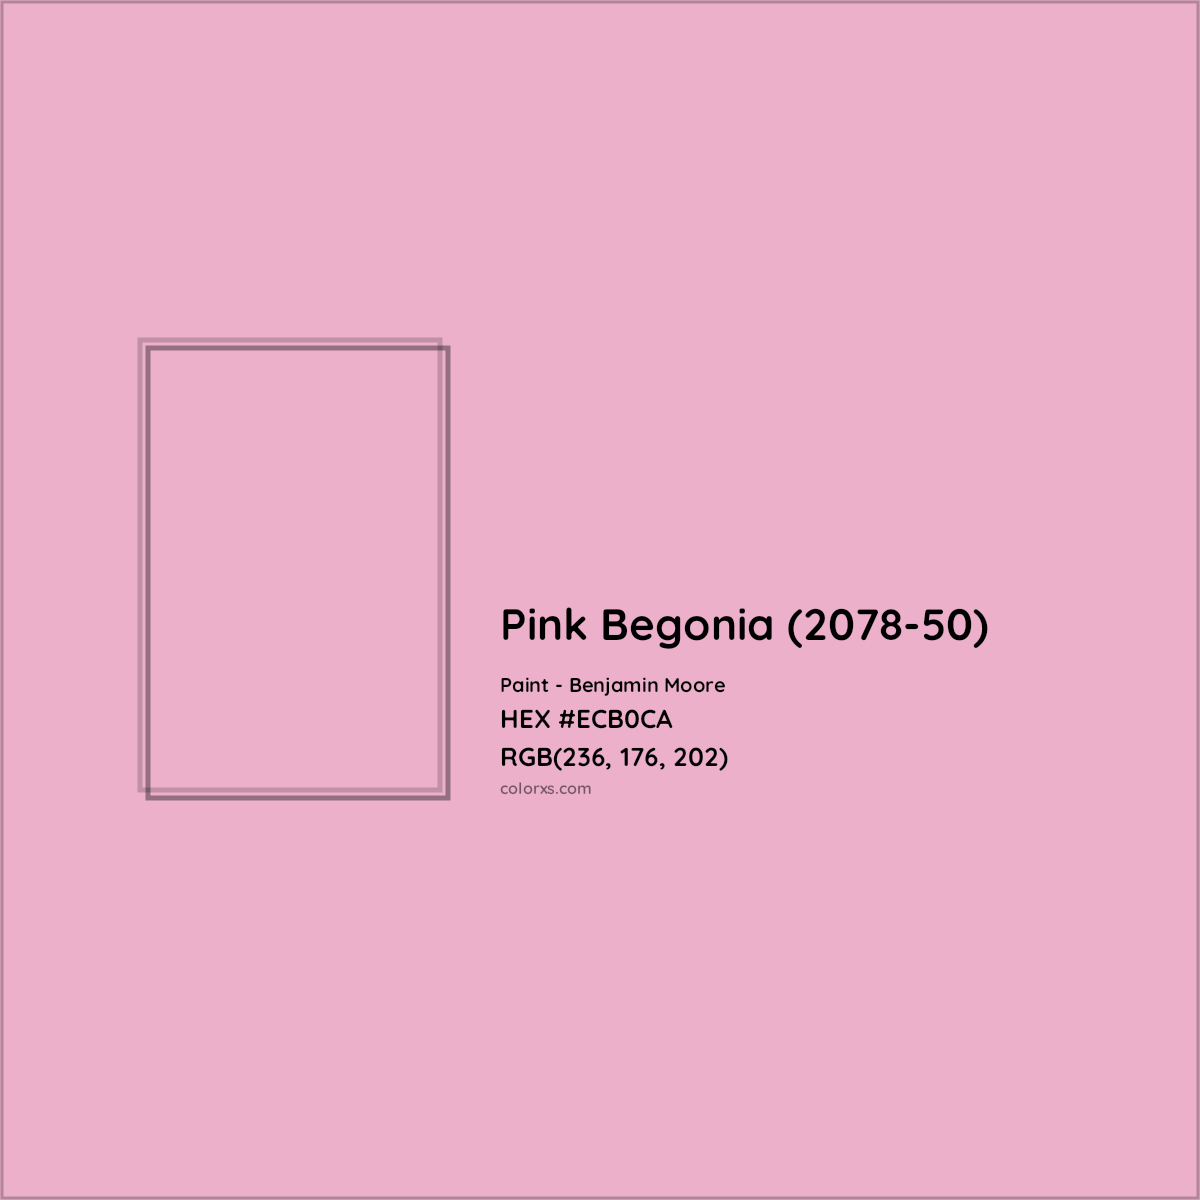 HEX #ECB0CA Pink Begonia (2078-50) Paint Benjamin Moore - Color Code